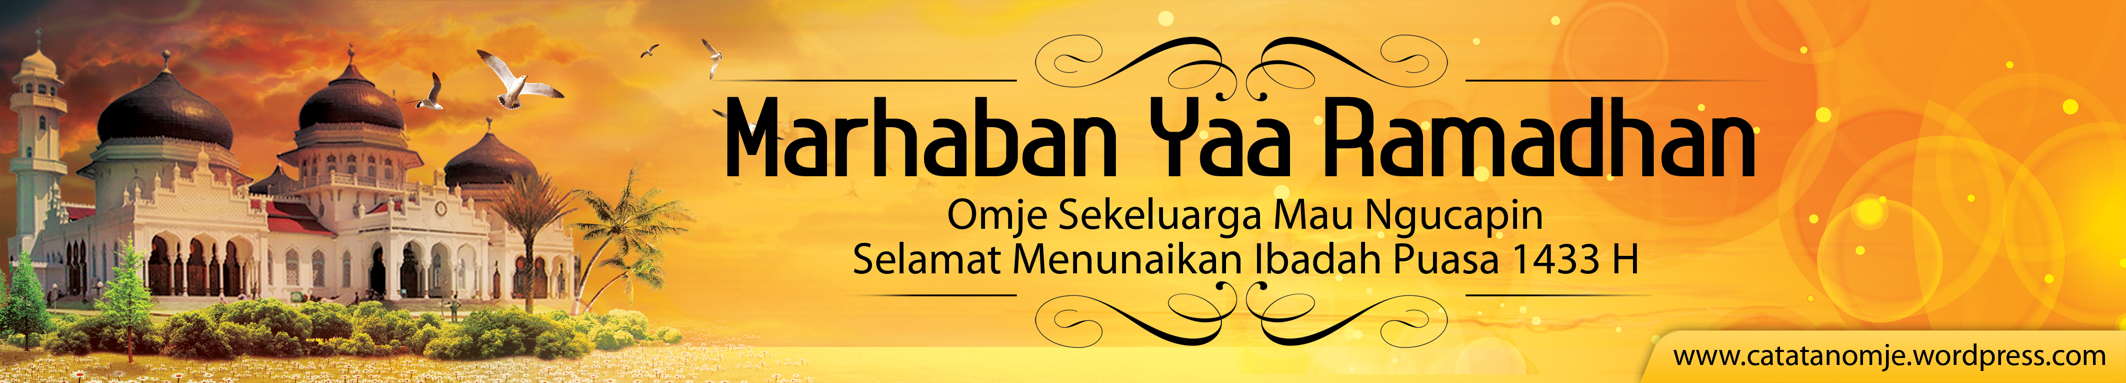 Gratis: Template Banner Marhaban Yaa Ramadhan 1433 H (PSD ...